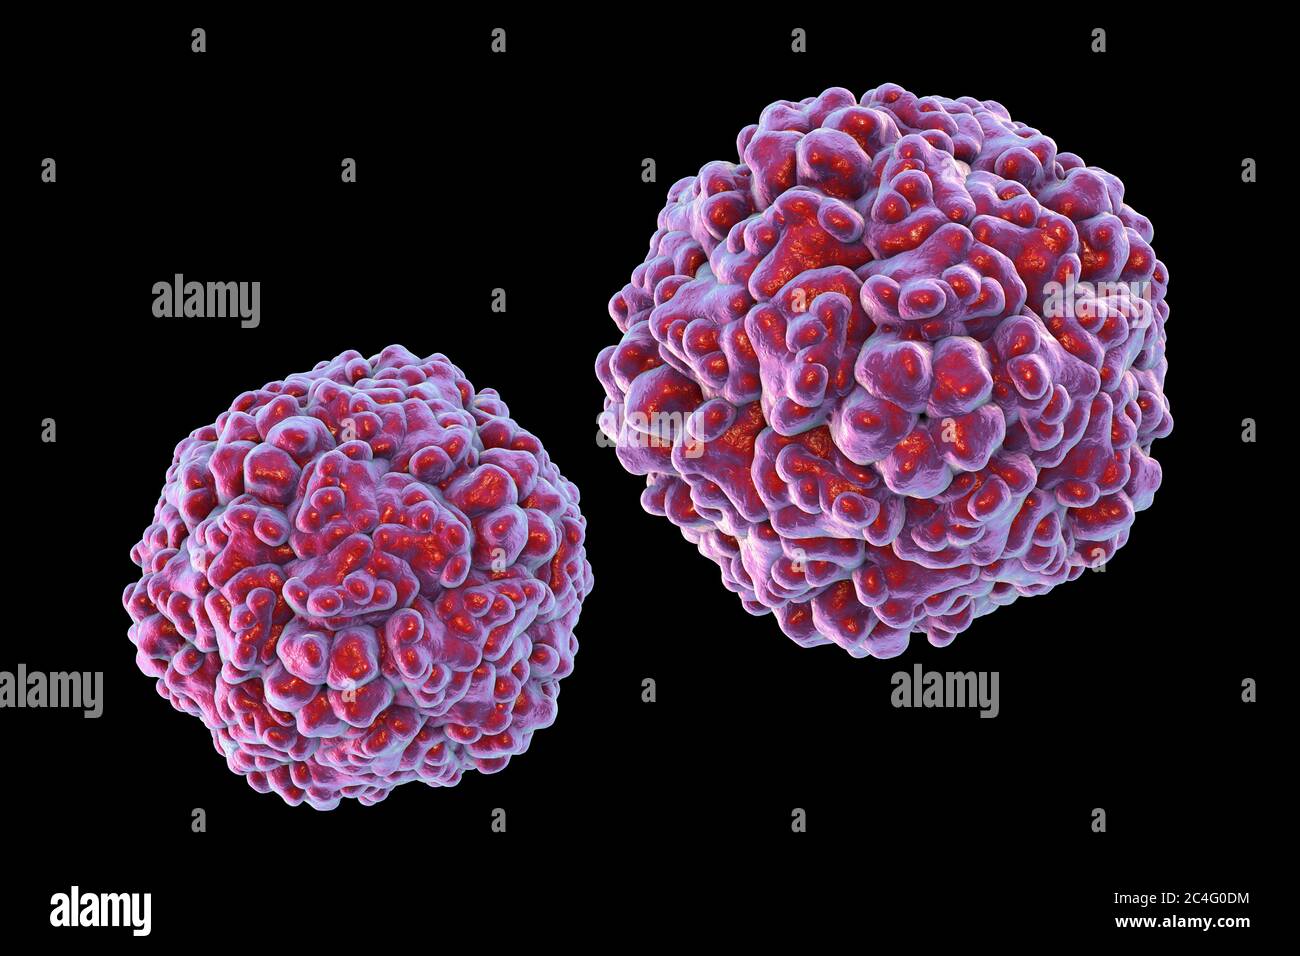 Enteroviruses, computer illustration. Enterovirus is a genus of positive-sense RNA viruses of the family Picornaviridae. They were originally classifi Stock Photo